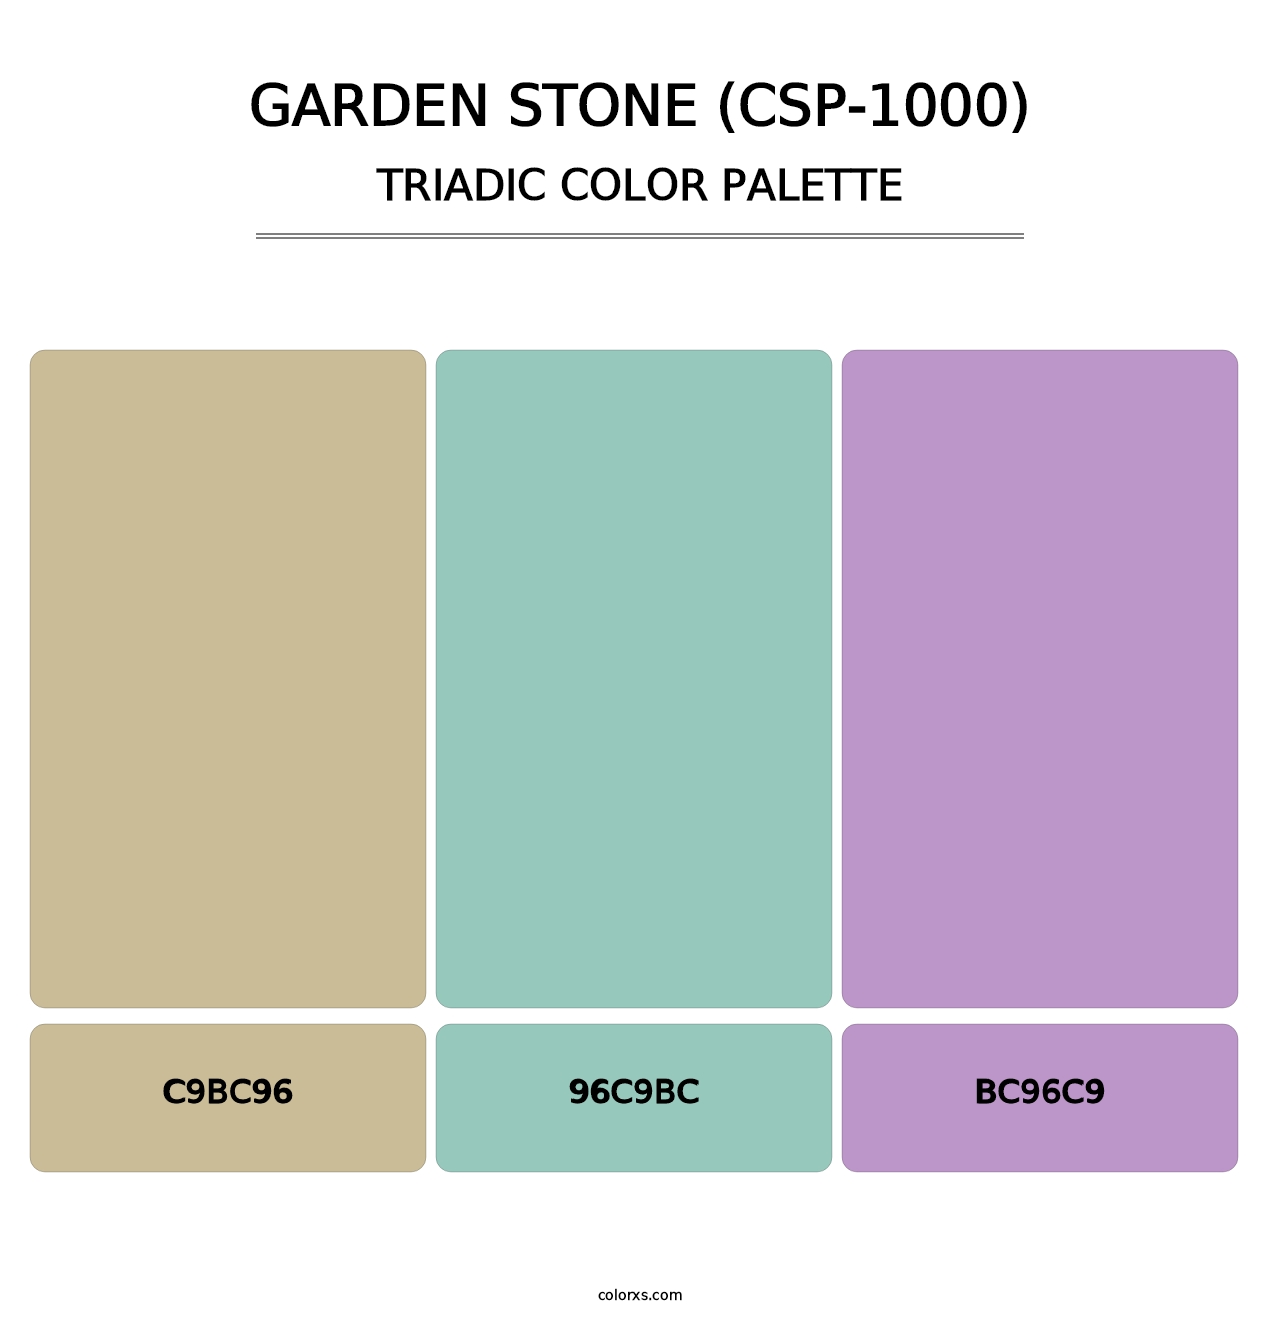 Garden Stone (CSP-1000) - Triadic Color Palette